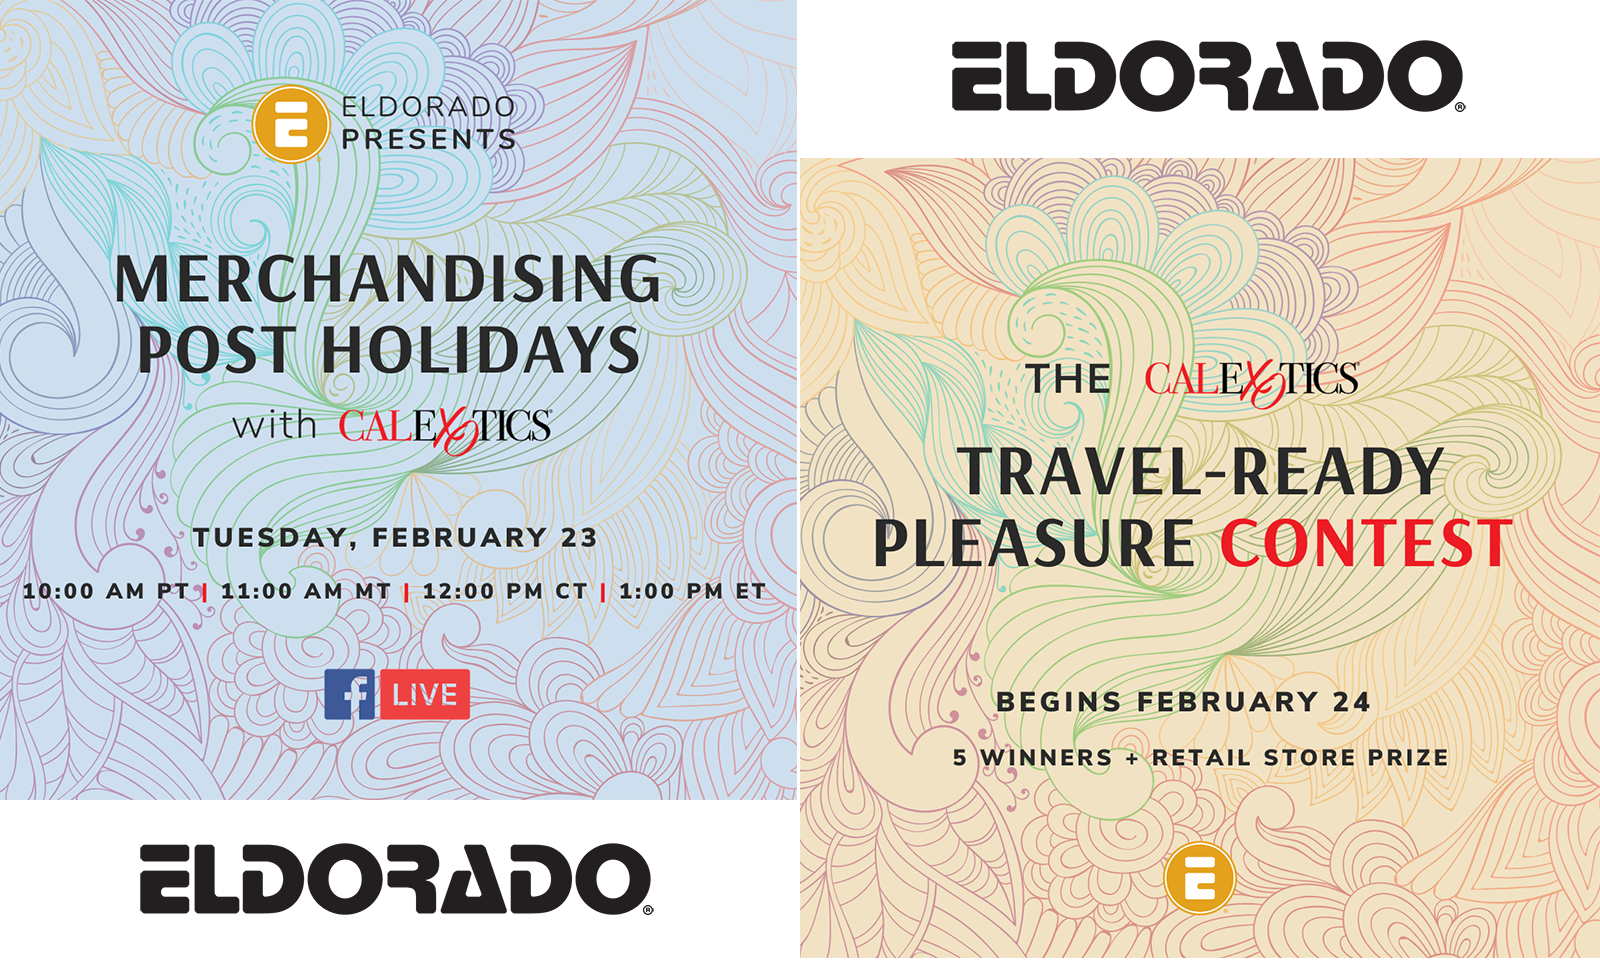 Eldorado & CalExotics Offer Post-Holiday Merchandising Tips